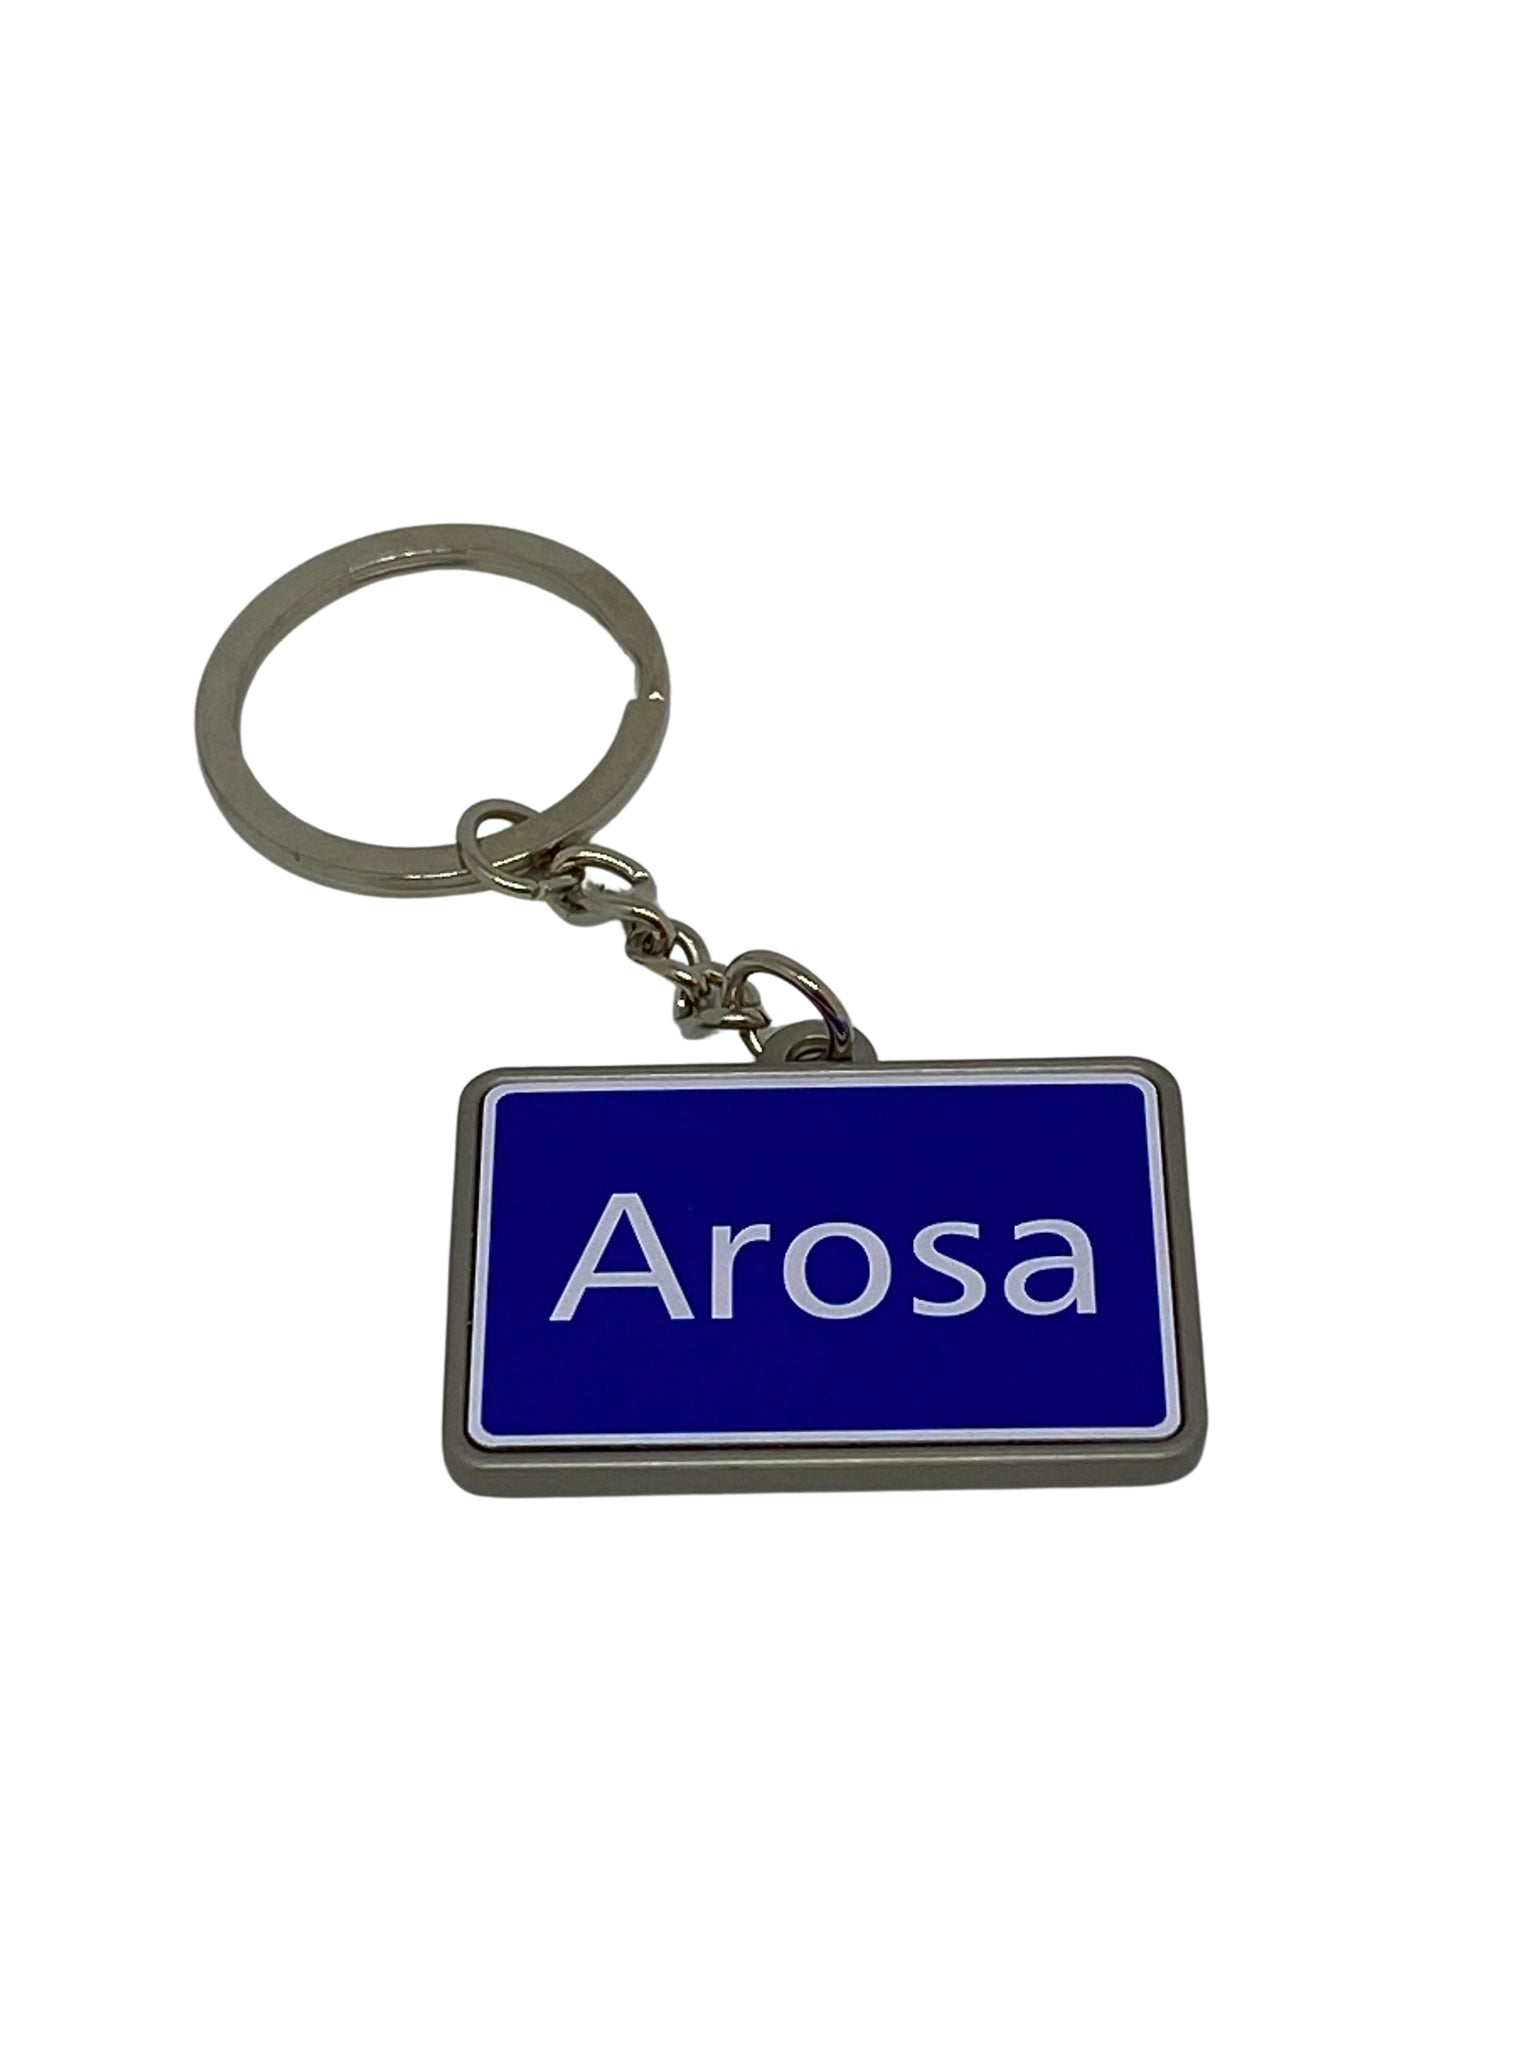 Arosa key ring